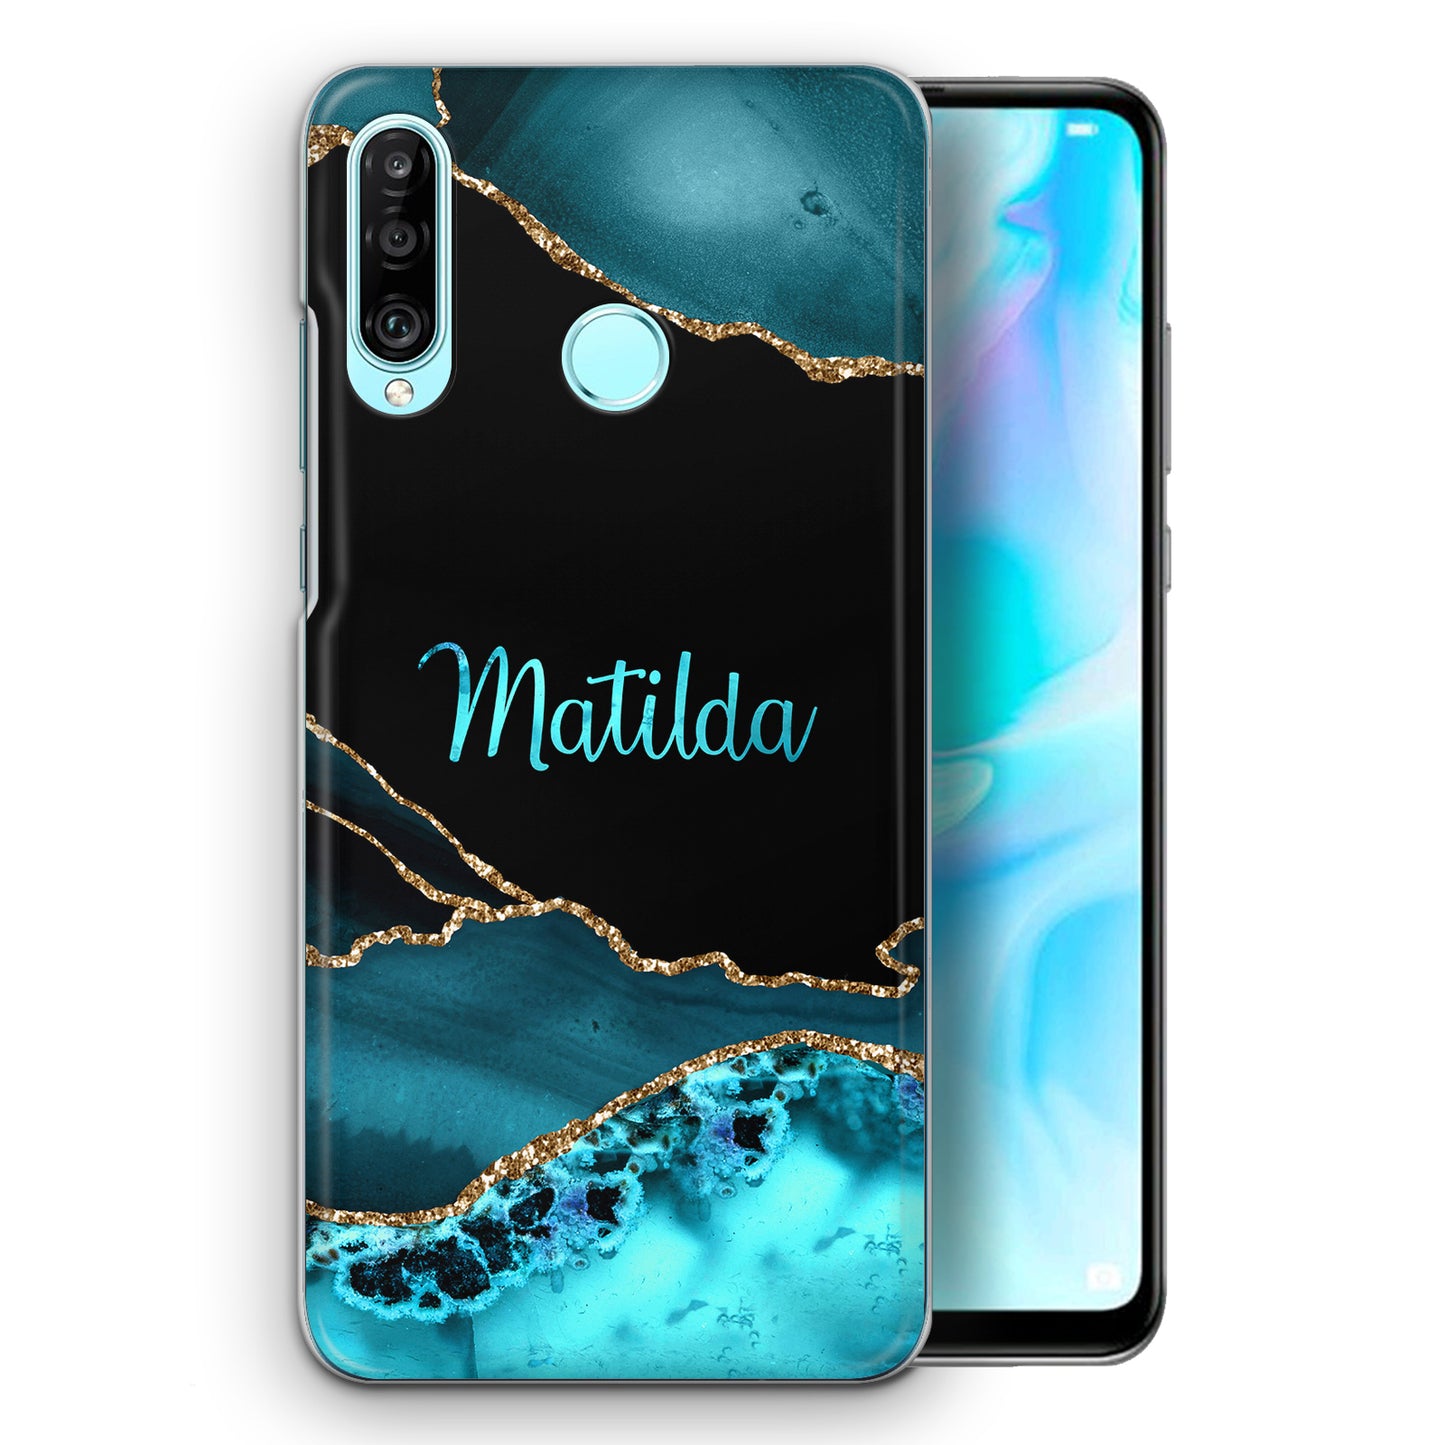 Personalised Honor Phone Hard Case with Stylish Name on Turquoise Swirl Marble